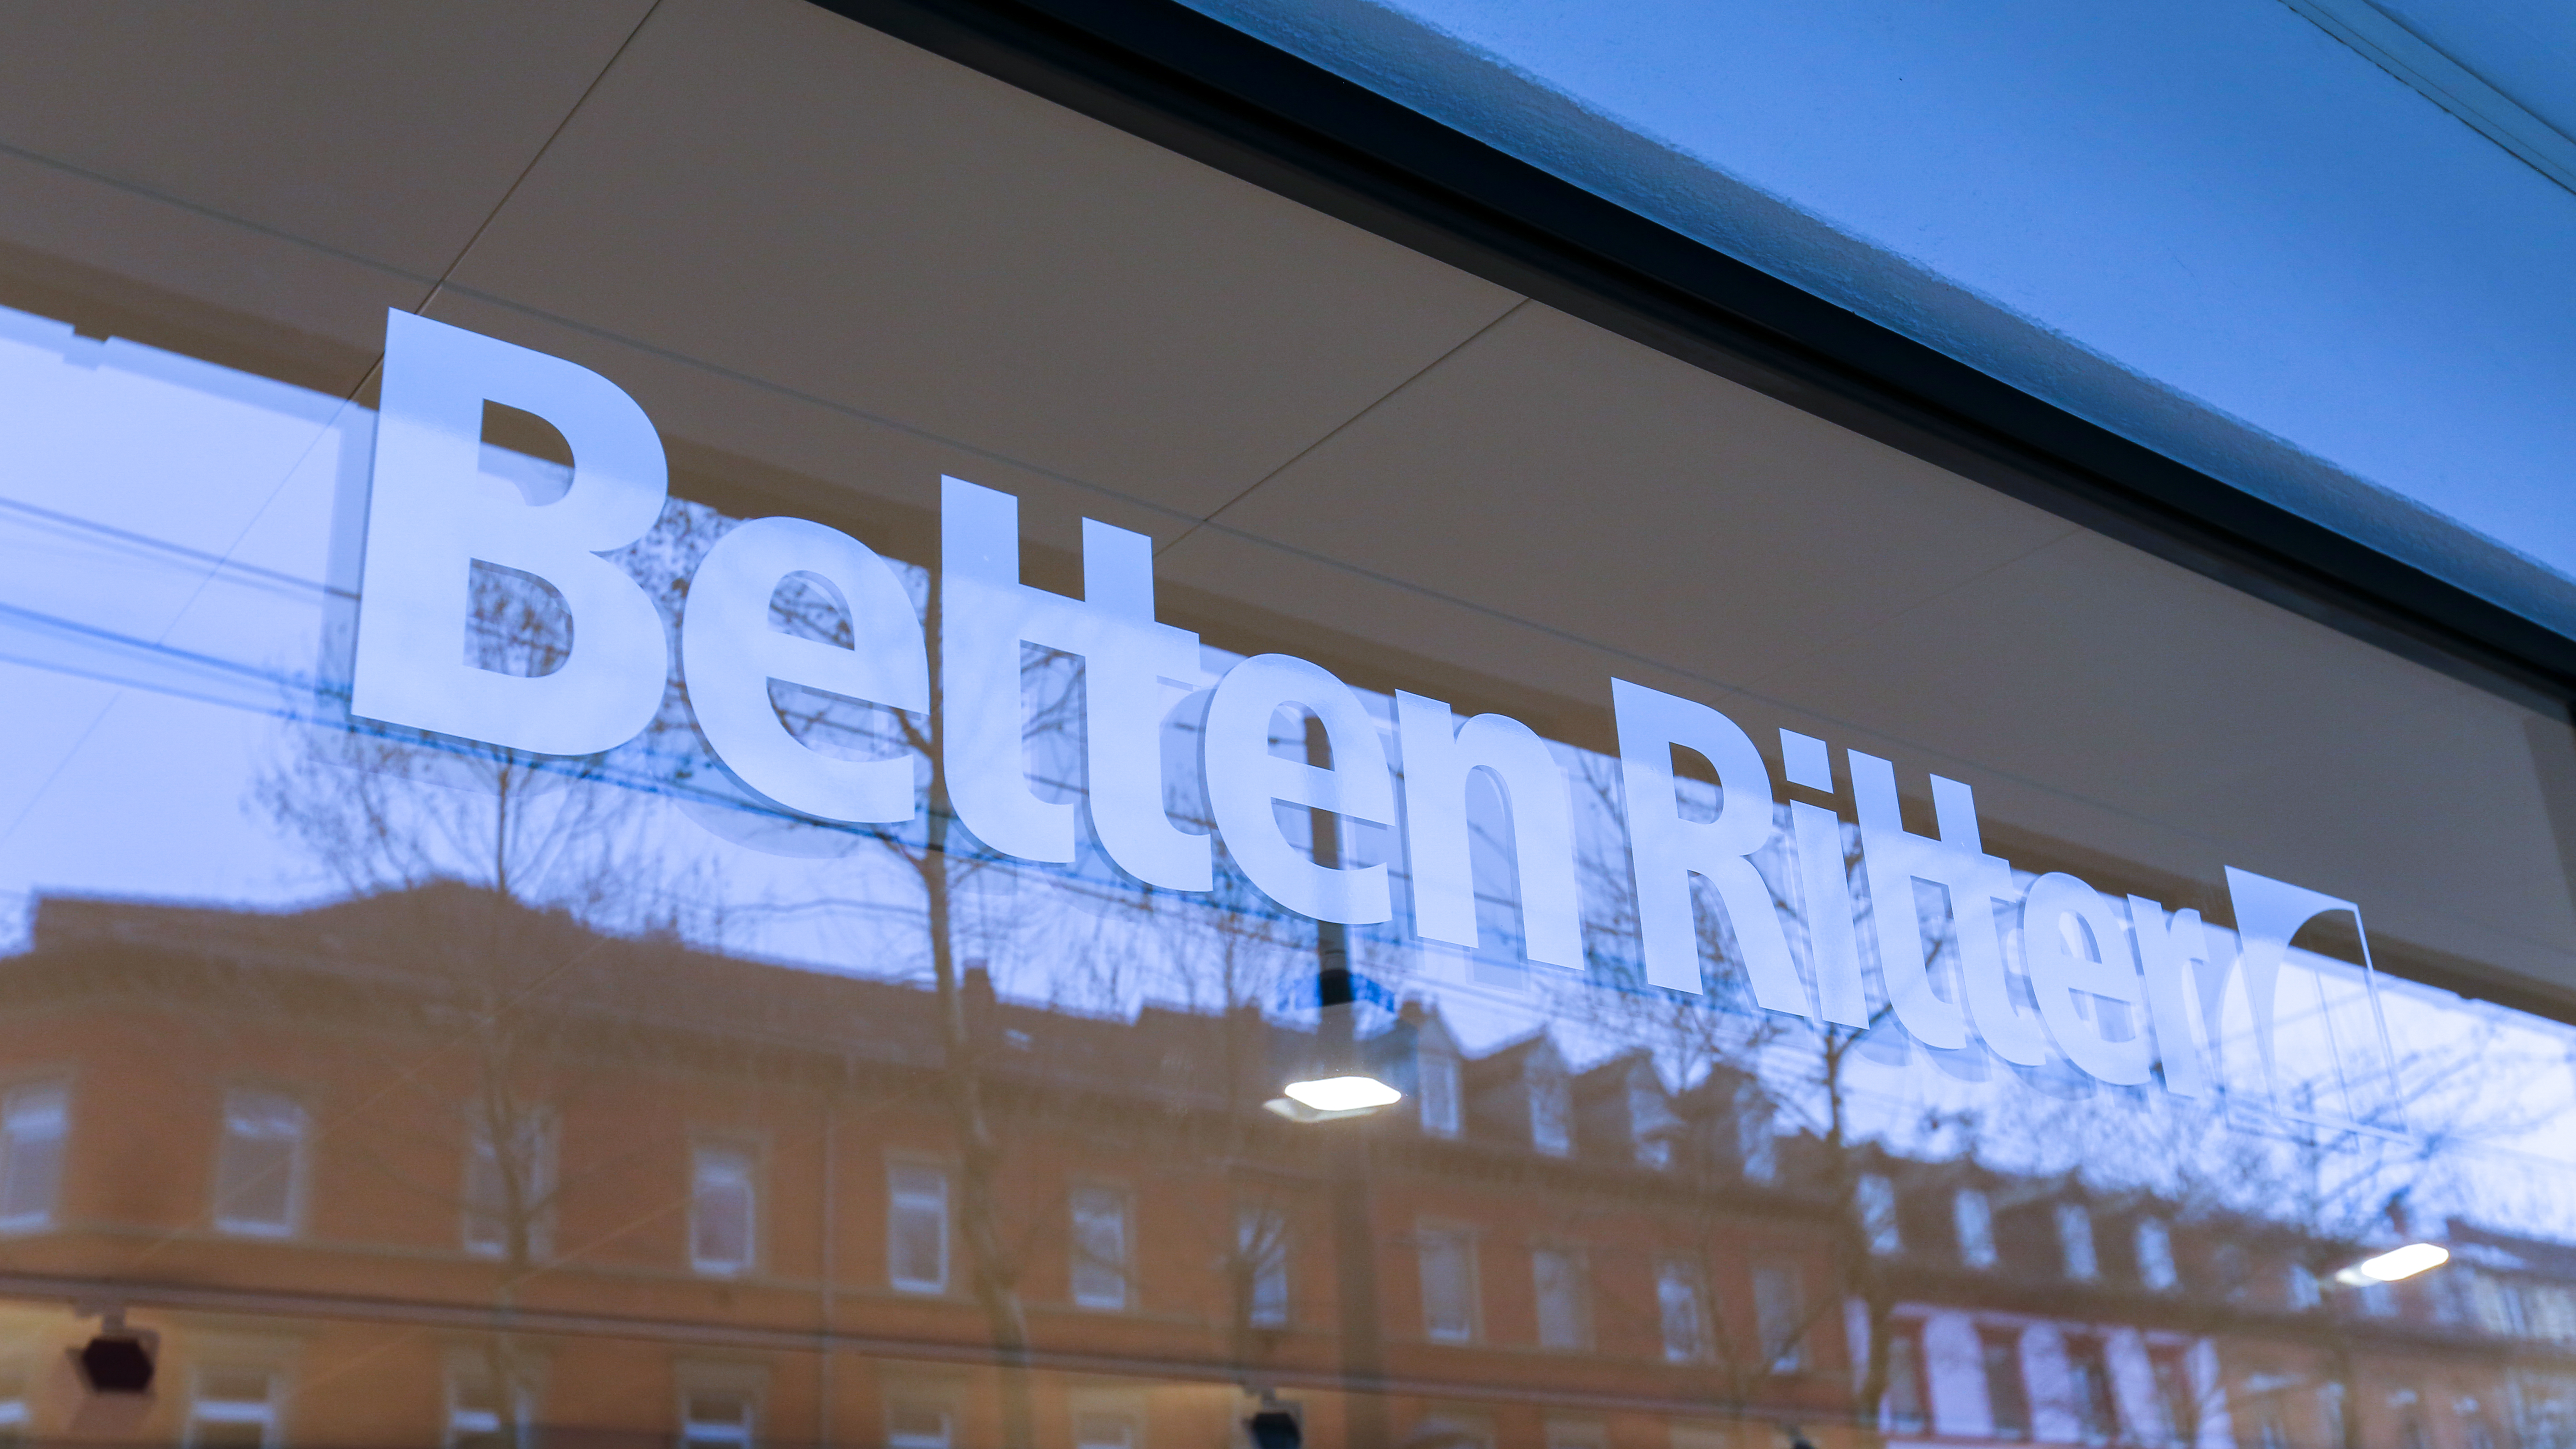 Bild 1 Betten Ritter GmbH in Karlsruhe